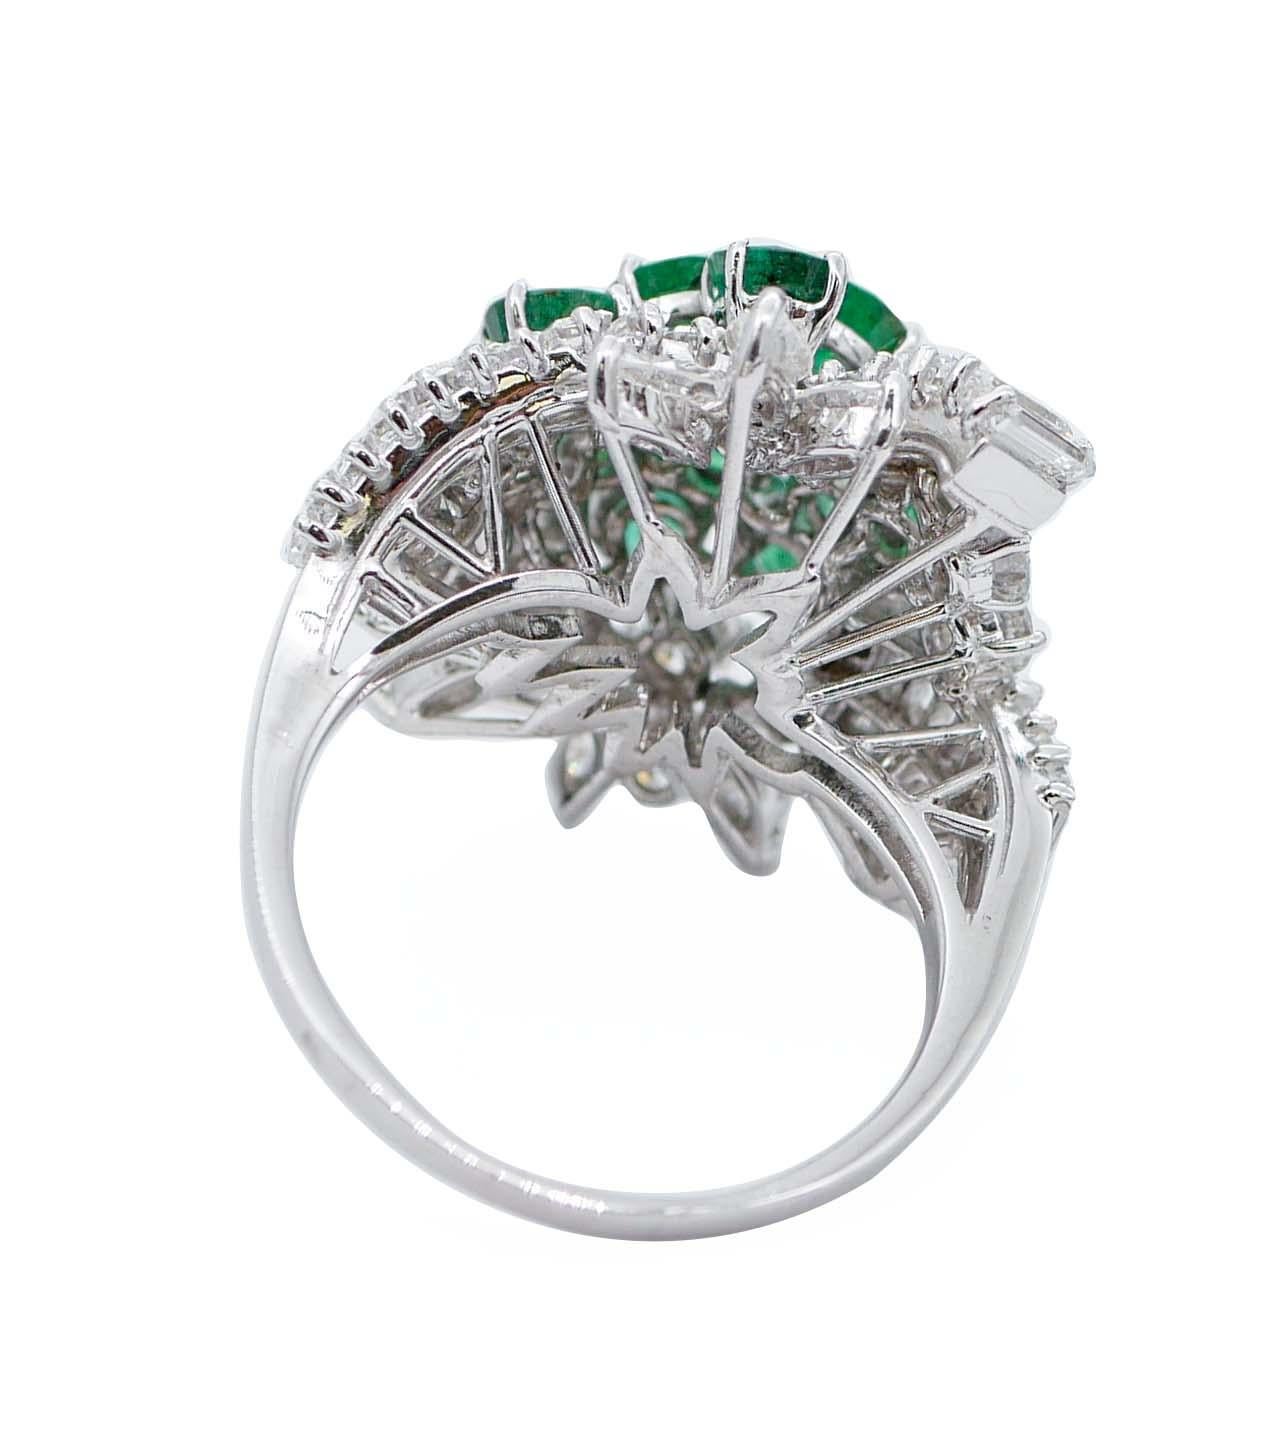 Mixed Cut Emeralds, Diamonds, 18 Karat White Gold Ring For Sale